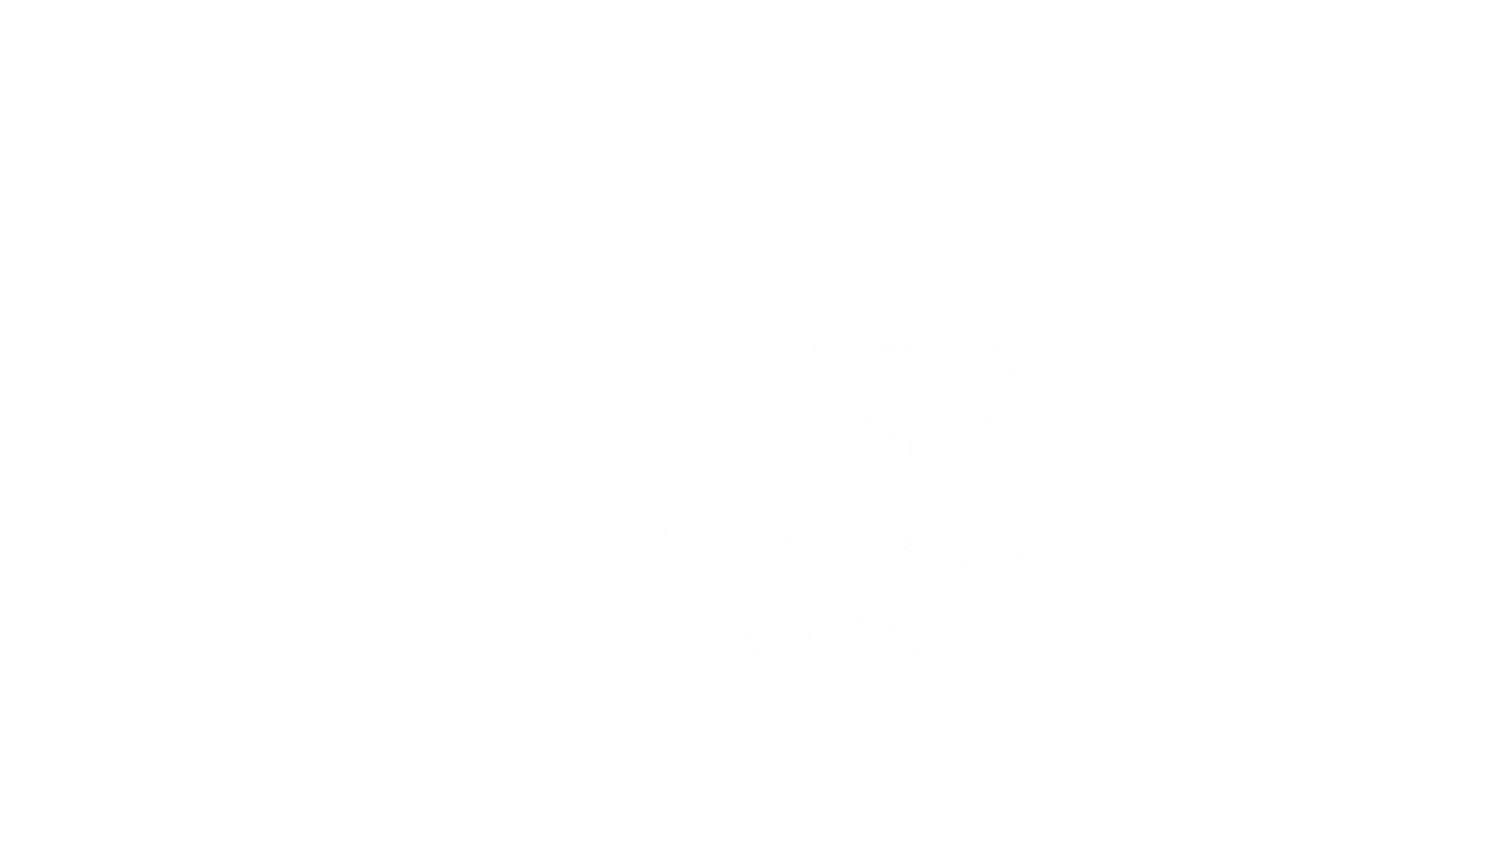 DOT Examinations